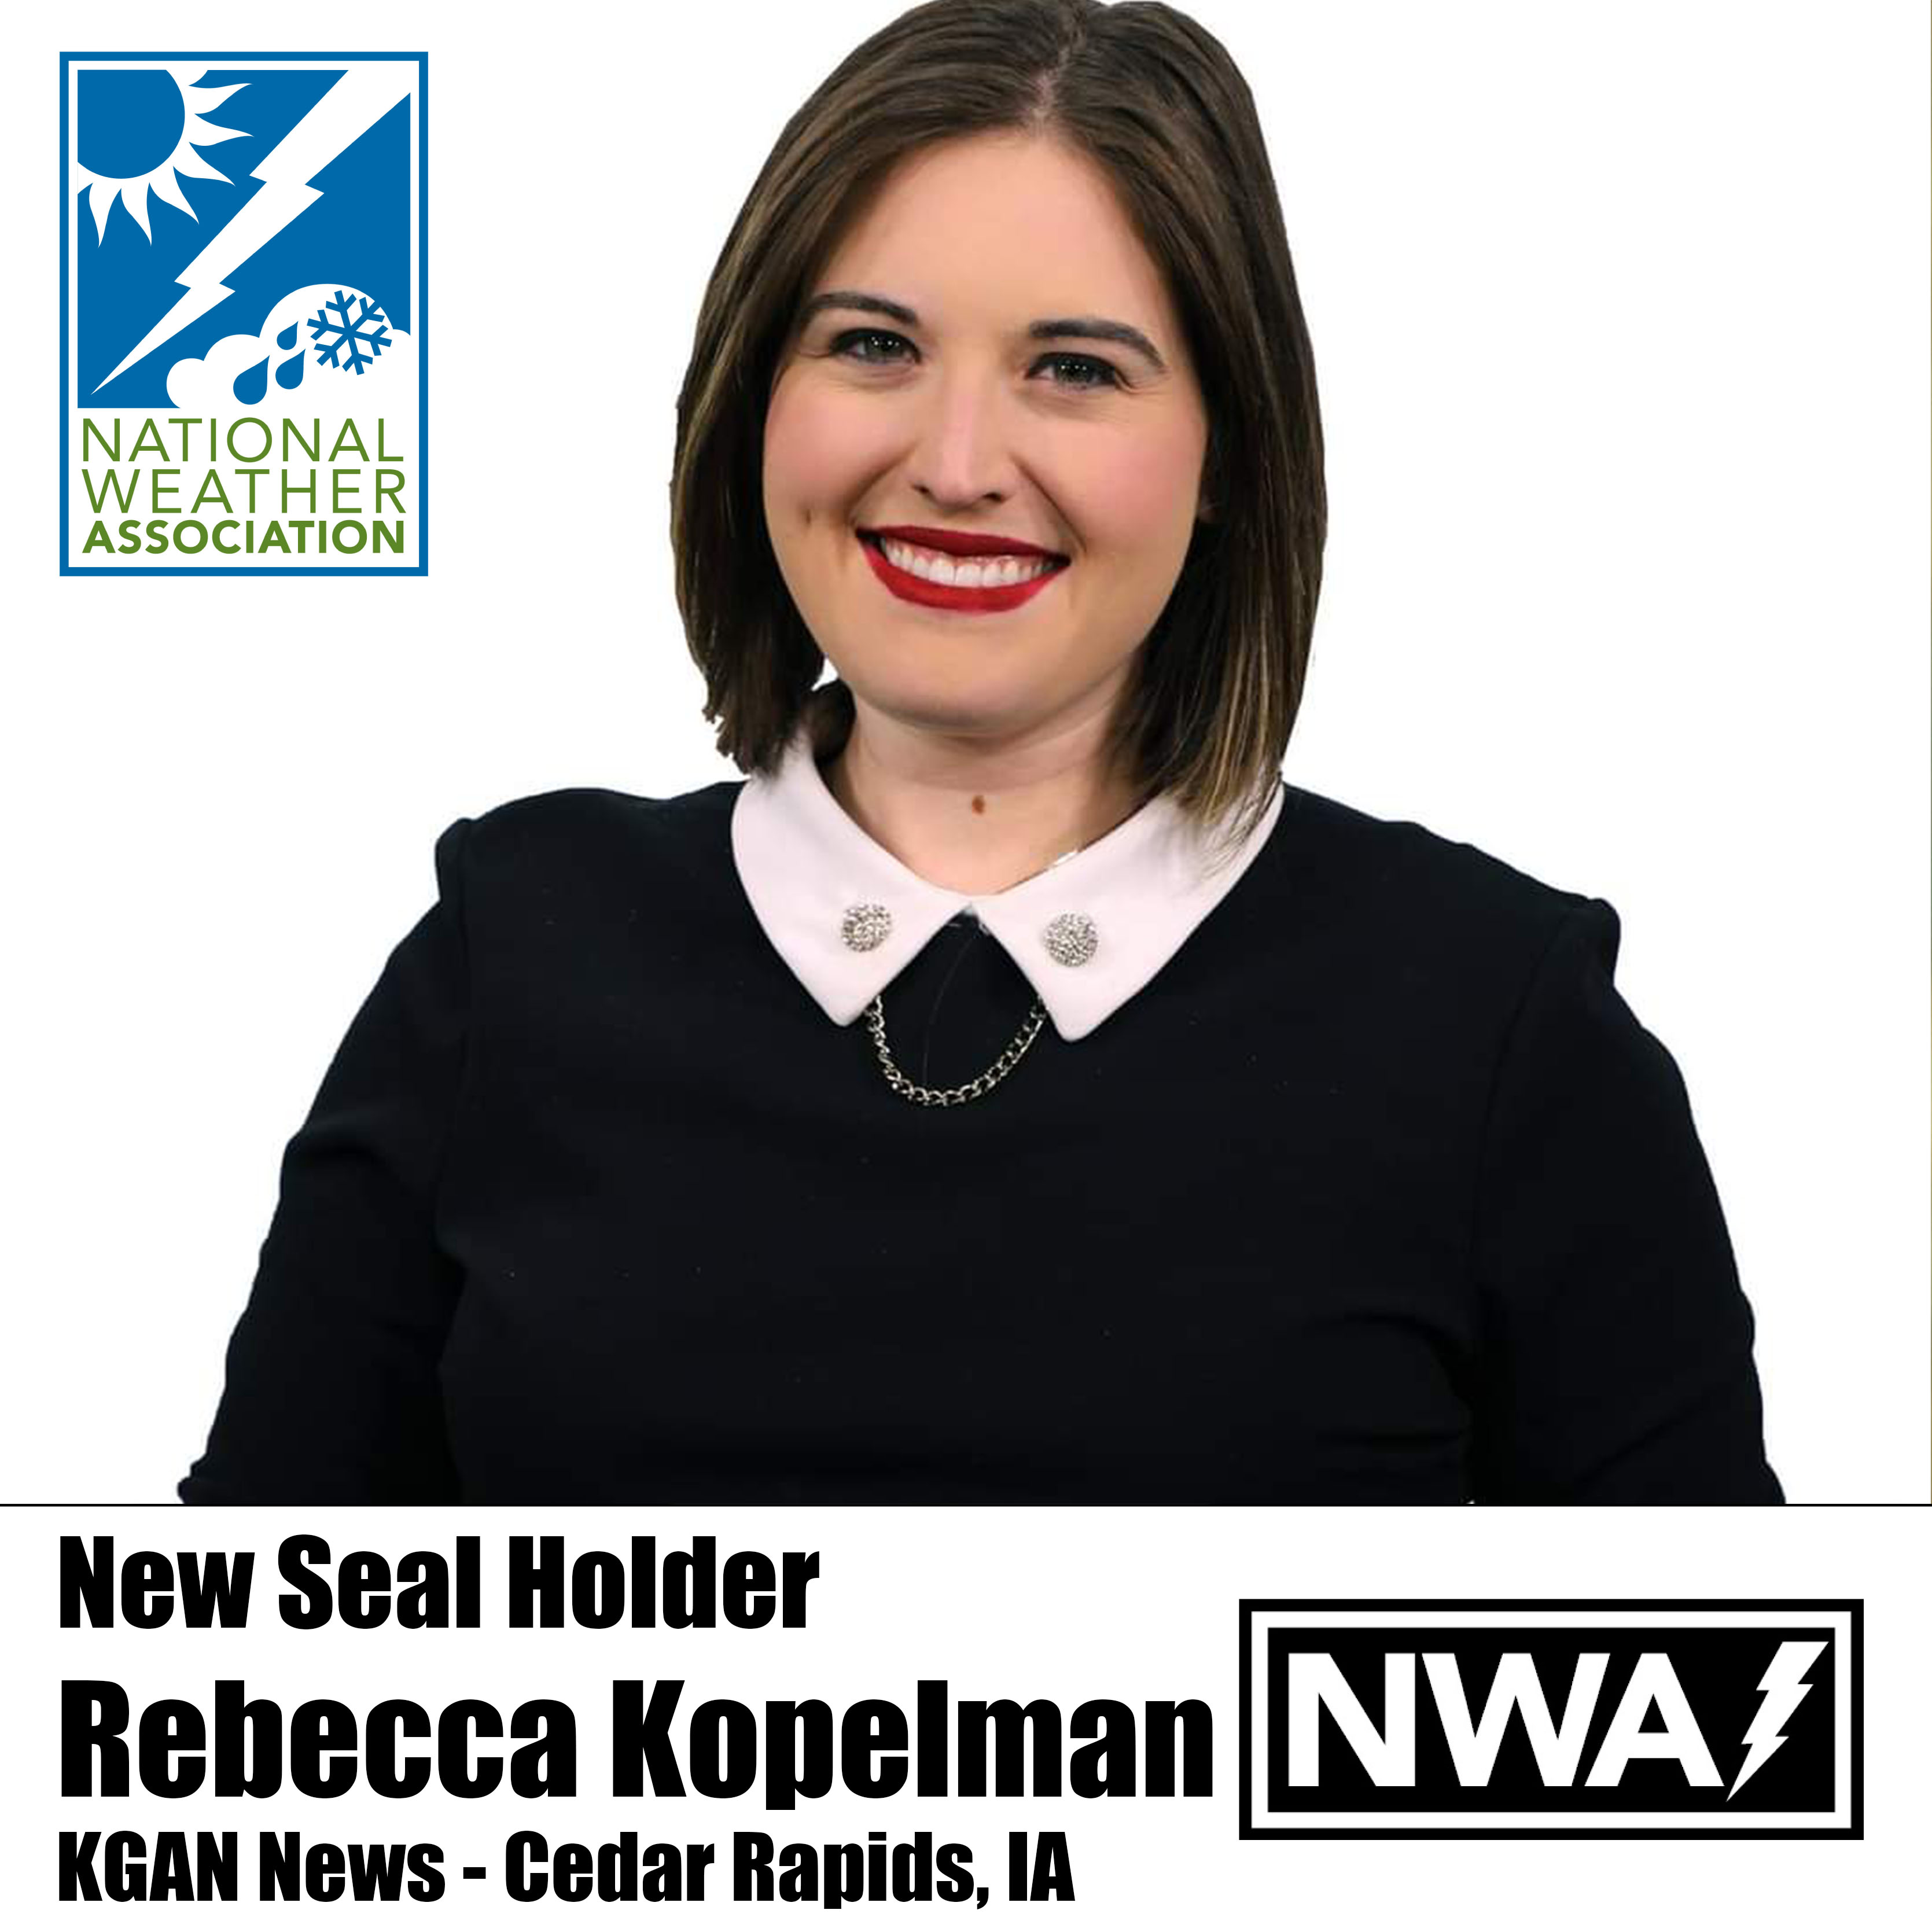 Rebecca Kopelman